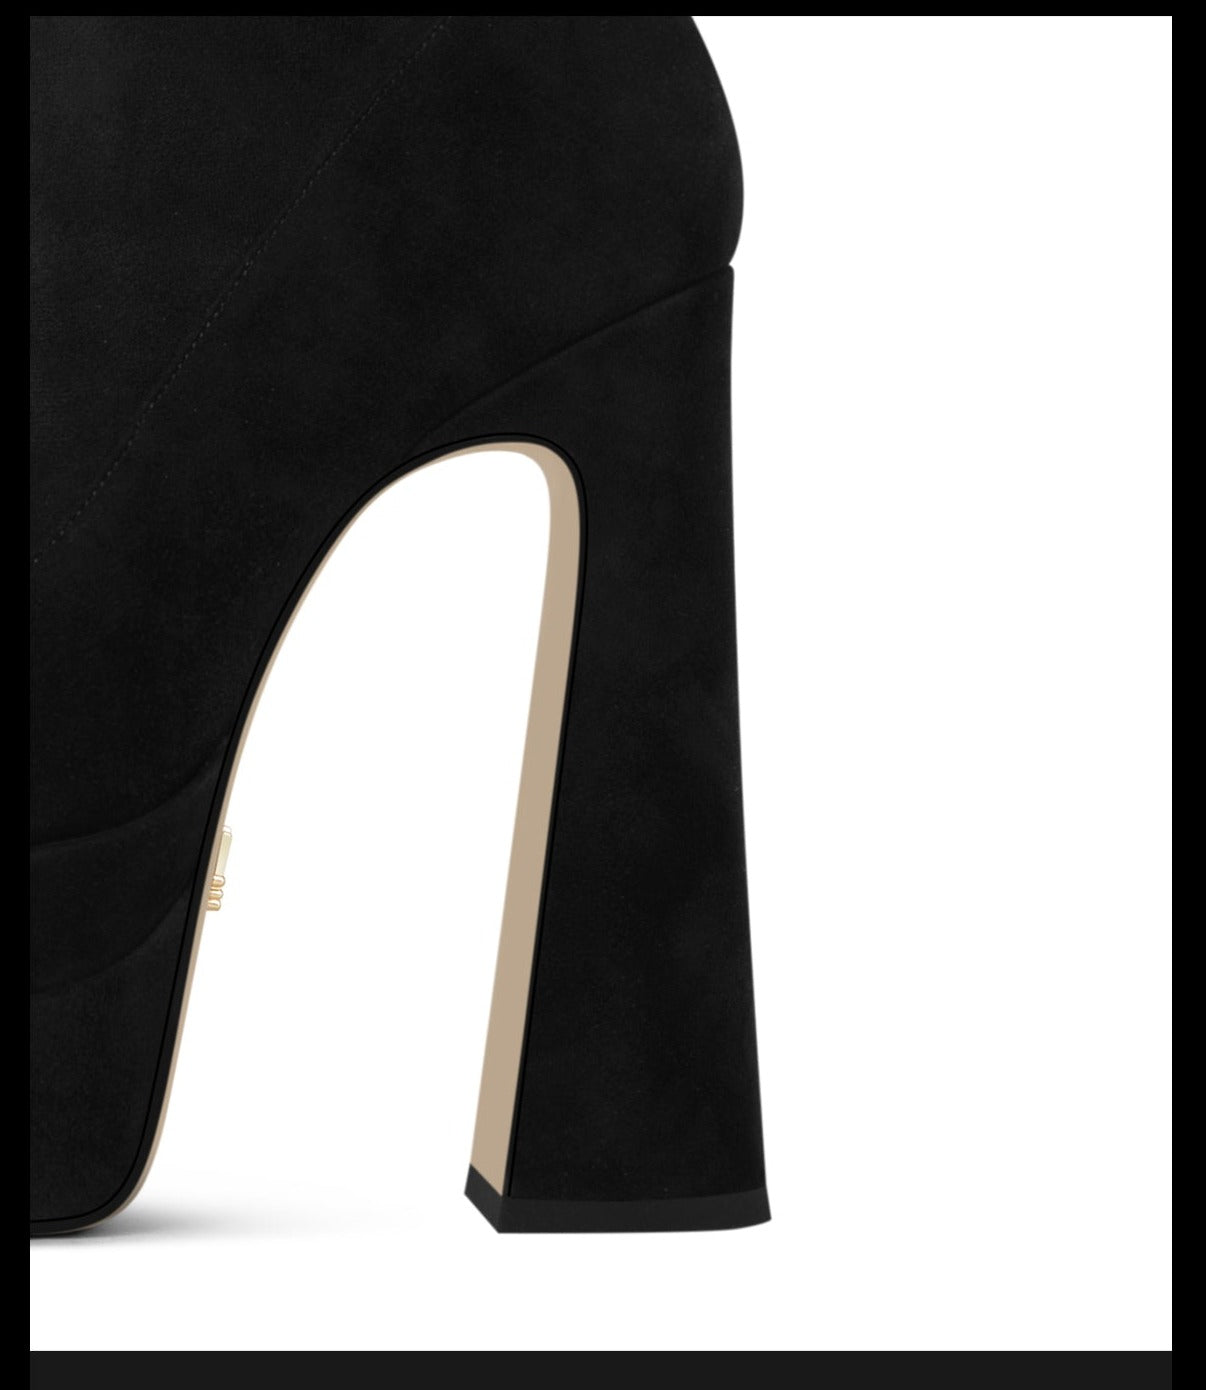 Fabfei black over-the-knee stretch block platform high heel boots - Nuraa